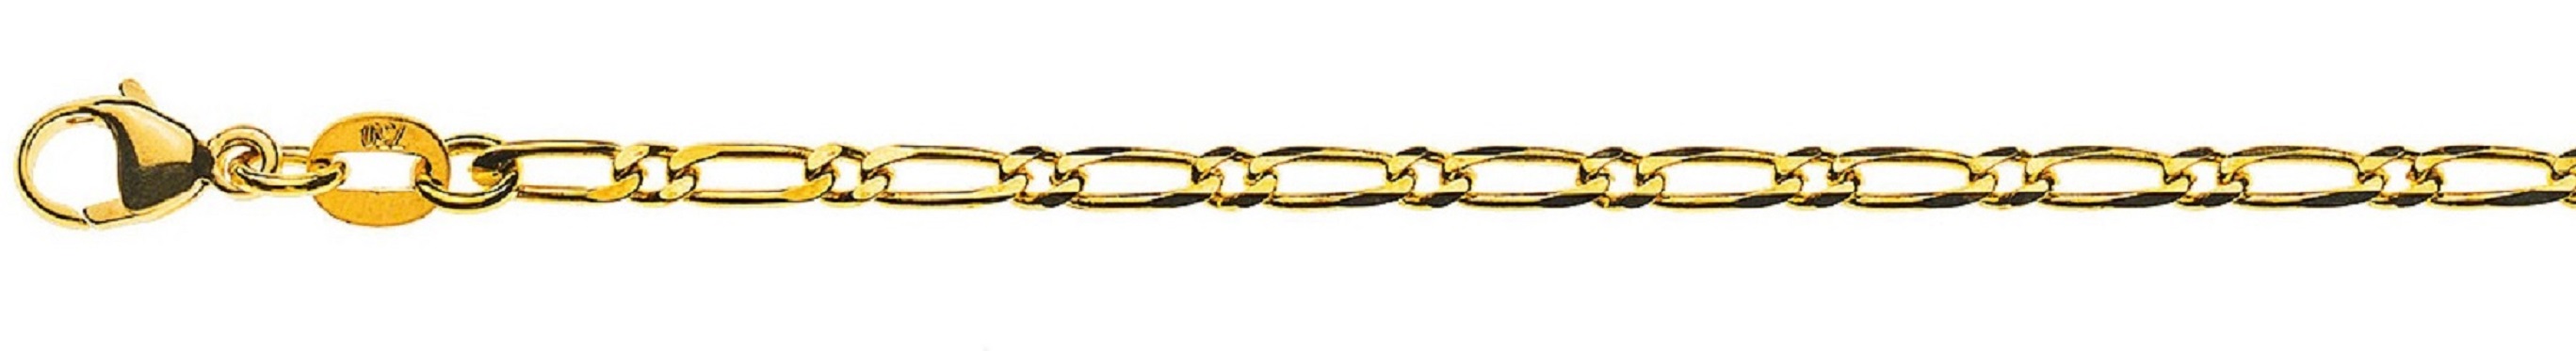 AURONOS Prestige Necklace yellow gold 18K Figaro chain 40cm 2.3mm